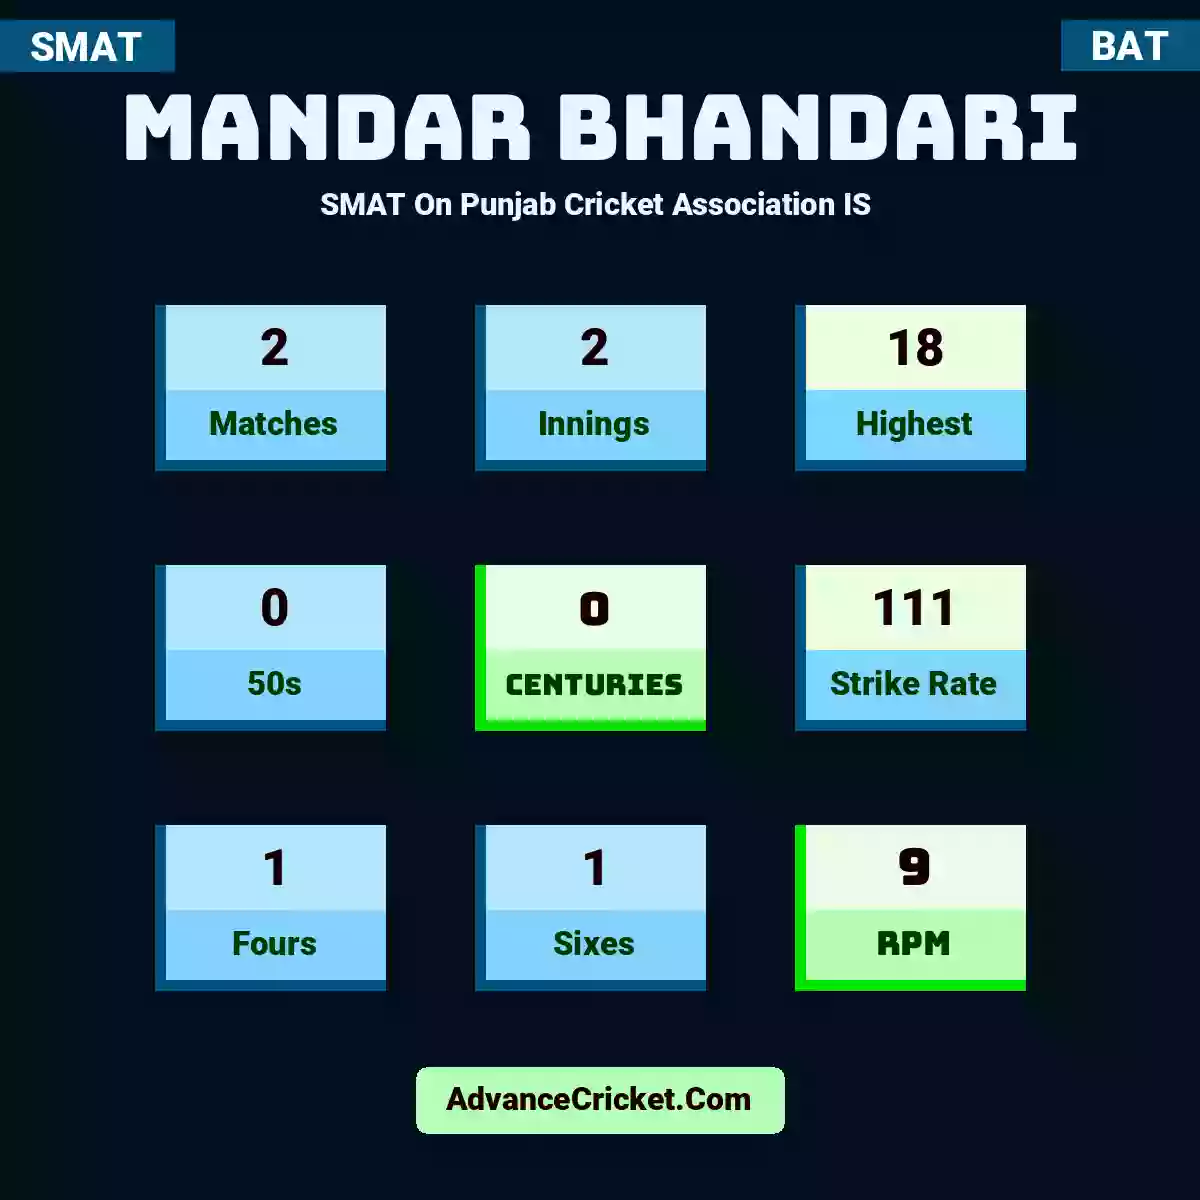 Mandar Bhandari SMAT  On Punjab Cricket Association IS , Mandar Bhandari played 2 matches, scored 18 runs as highest, 0 half-centuries, and 0 centuries, with a strike rate of 111. M.Bhandari hit 1 fours and 1 sixes, with an RPM of 9.